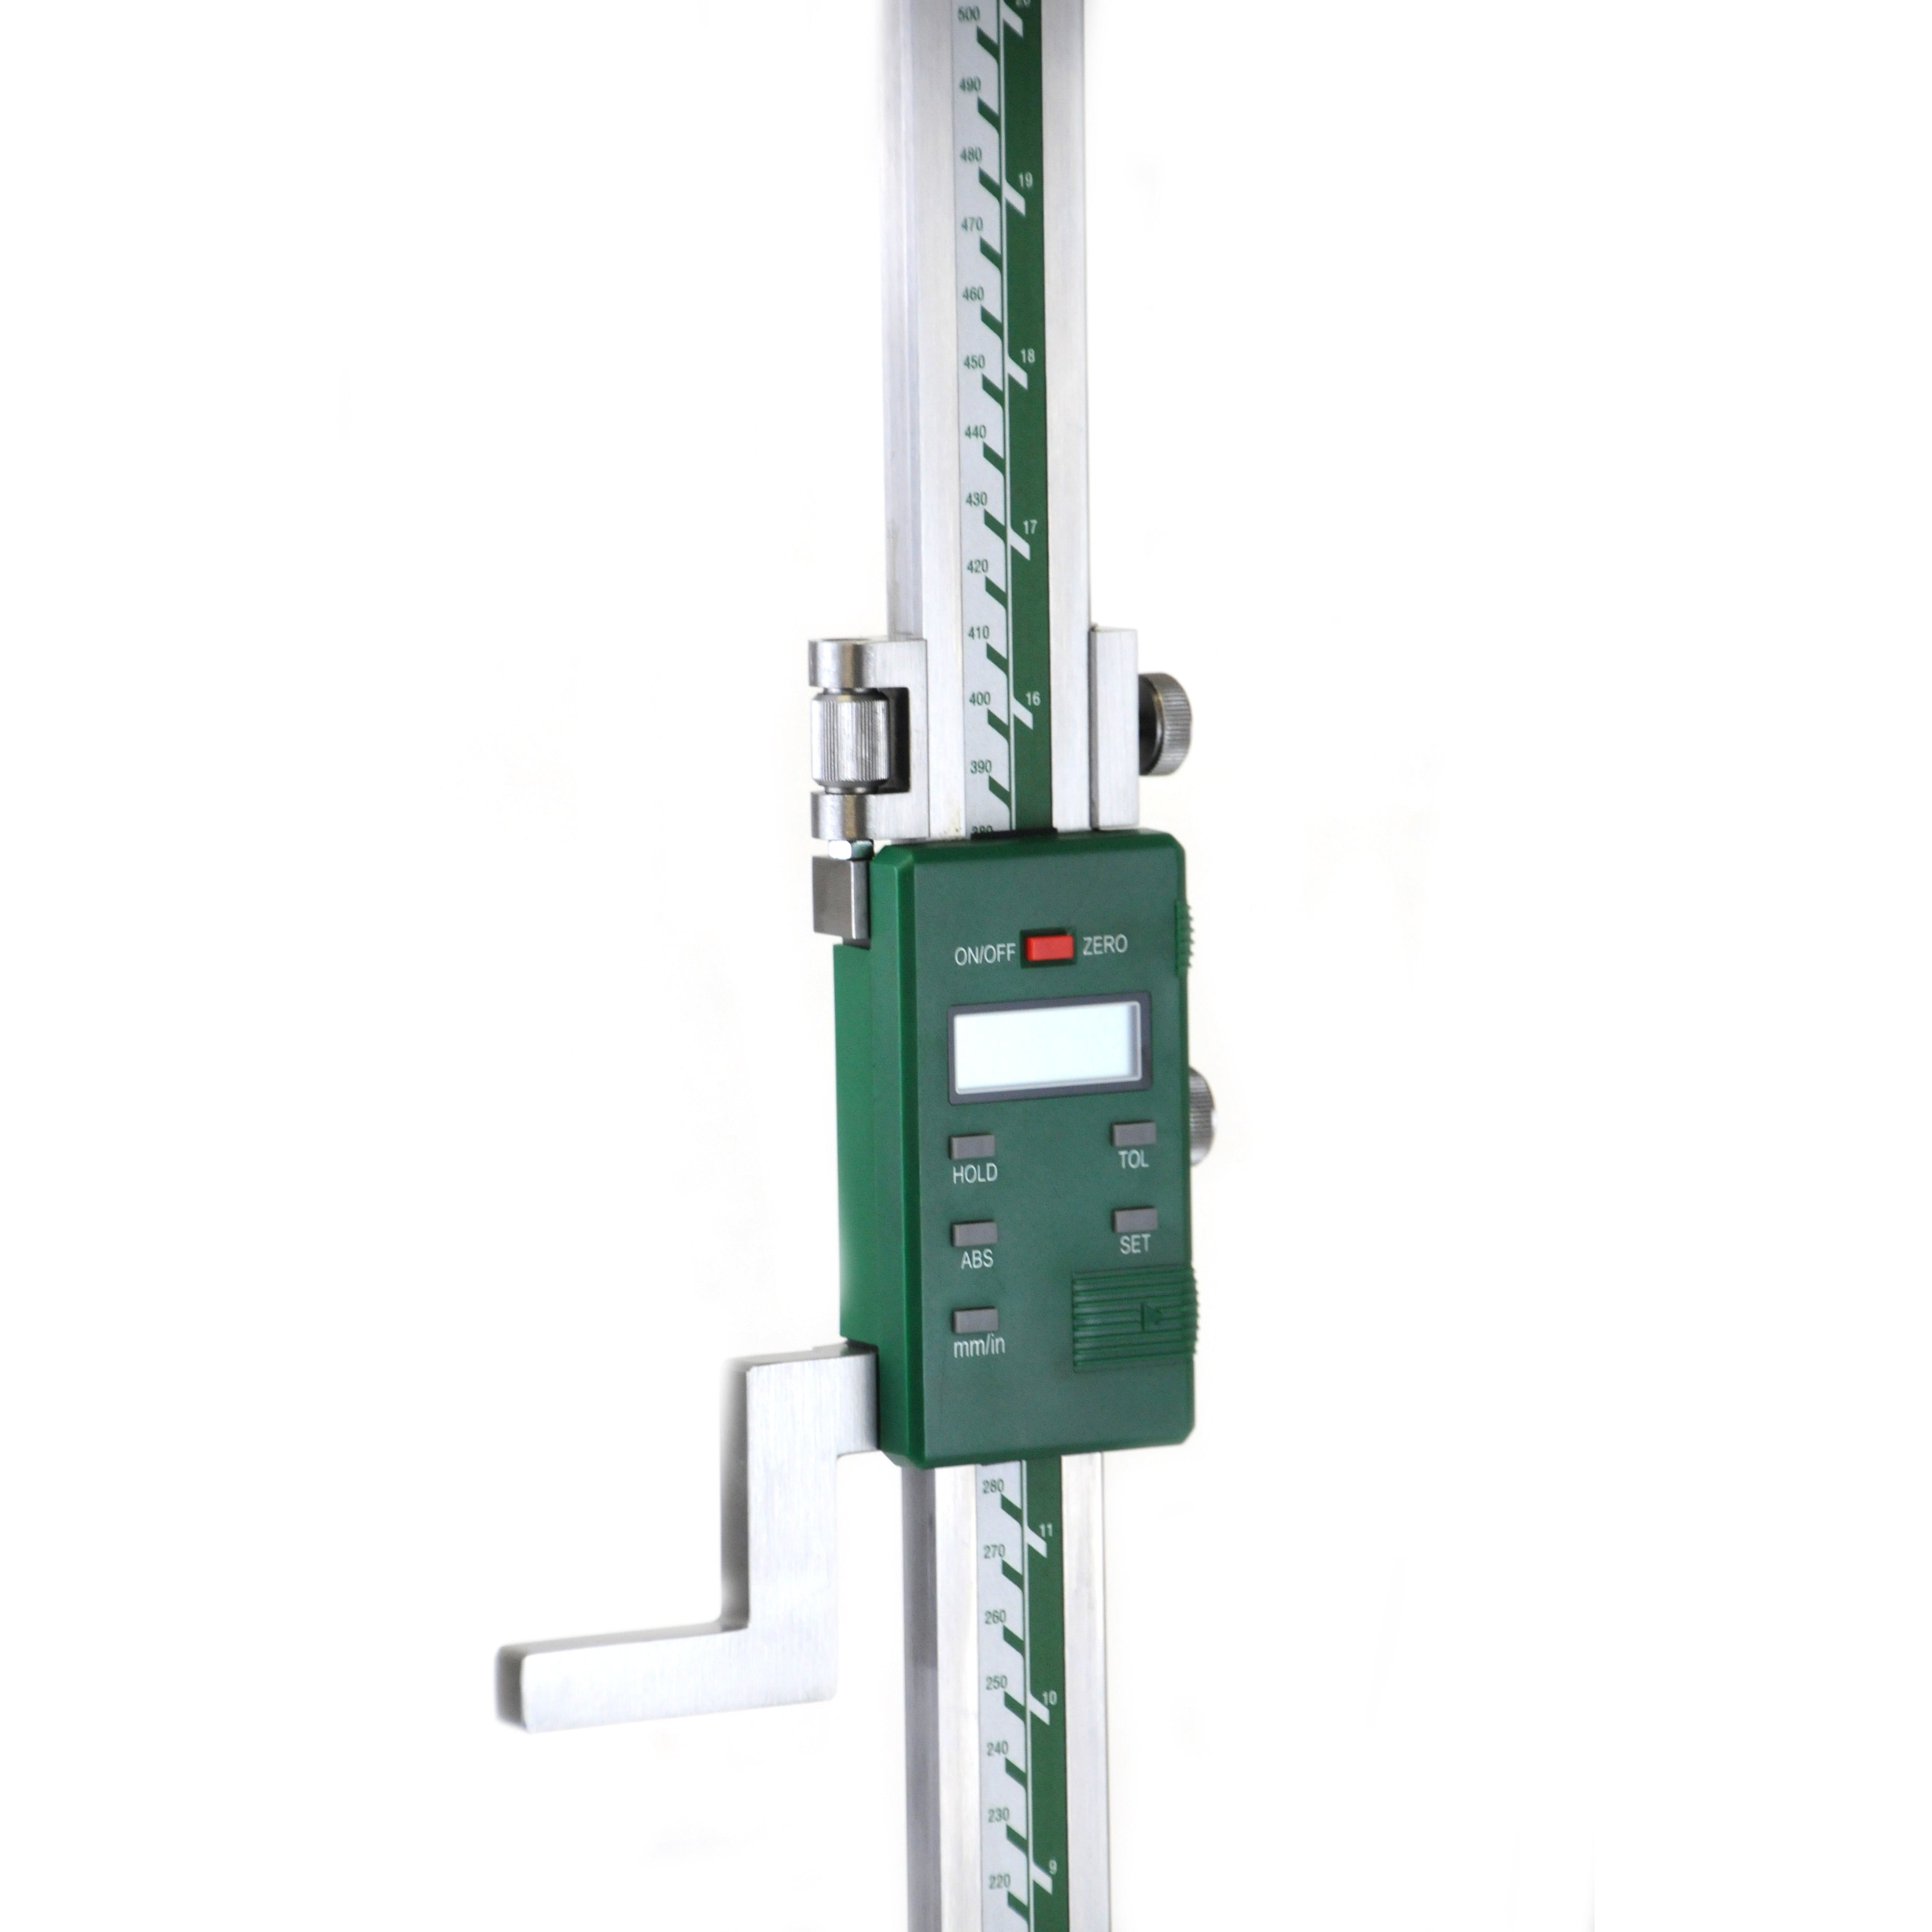 Insize Digital Height Gauge  0-600mm / 0-24" Range Series 1150-600